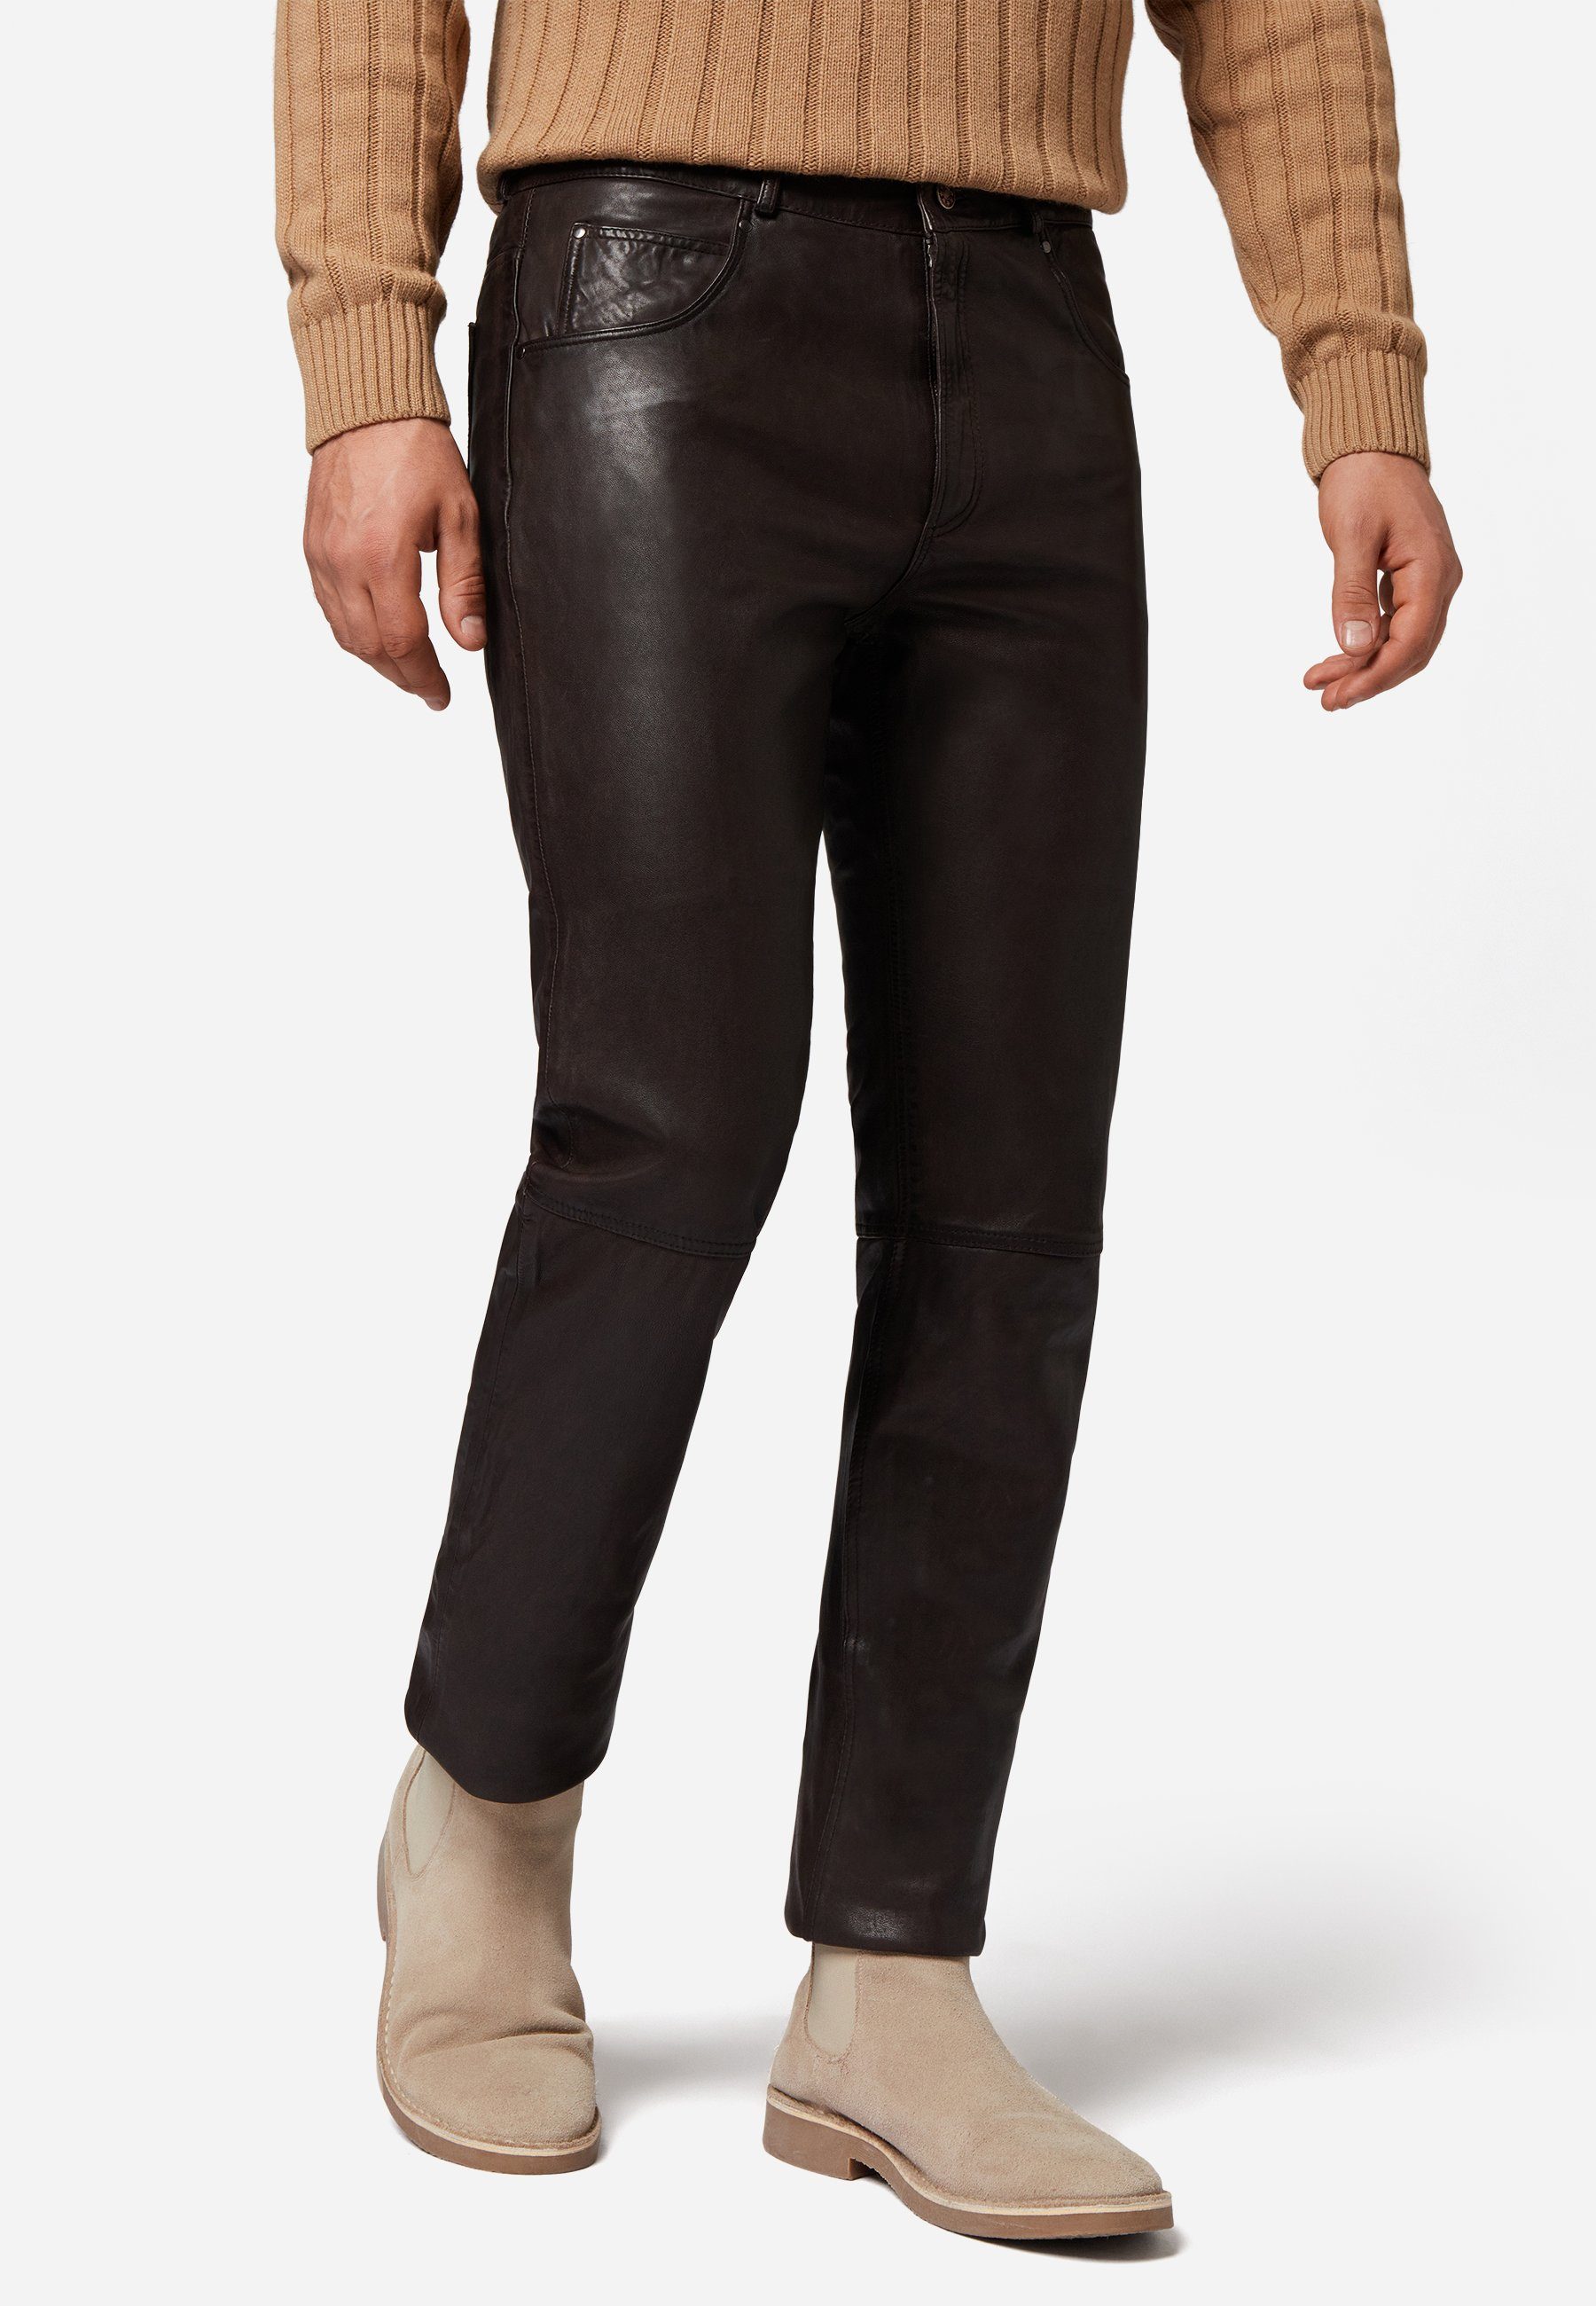 Trant Hochwertiges 5-Pocket Pant Jeans-Optik RICANO Leder; Braun Lamm-Nappa Lederhose